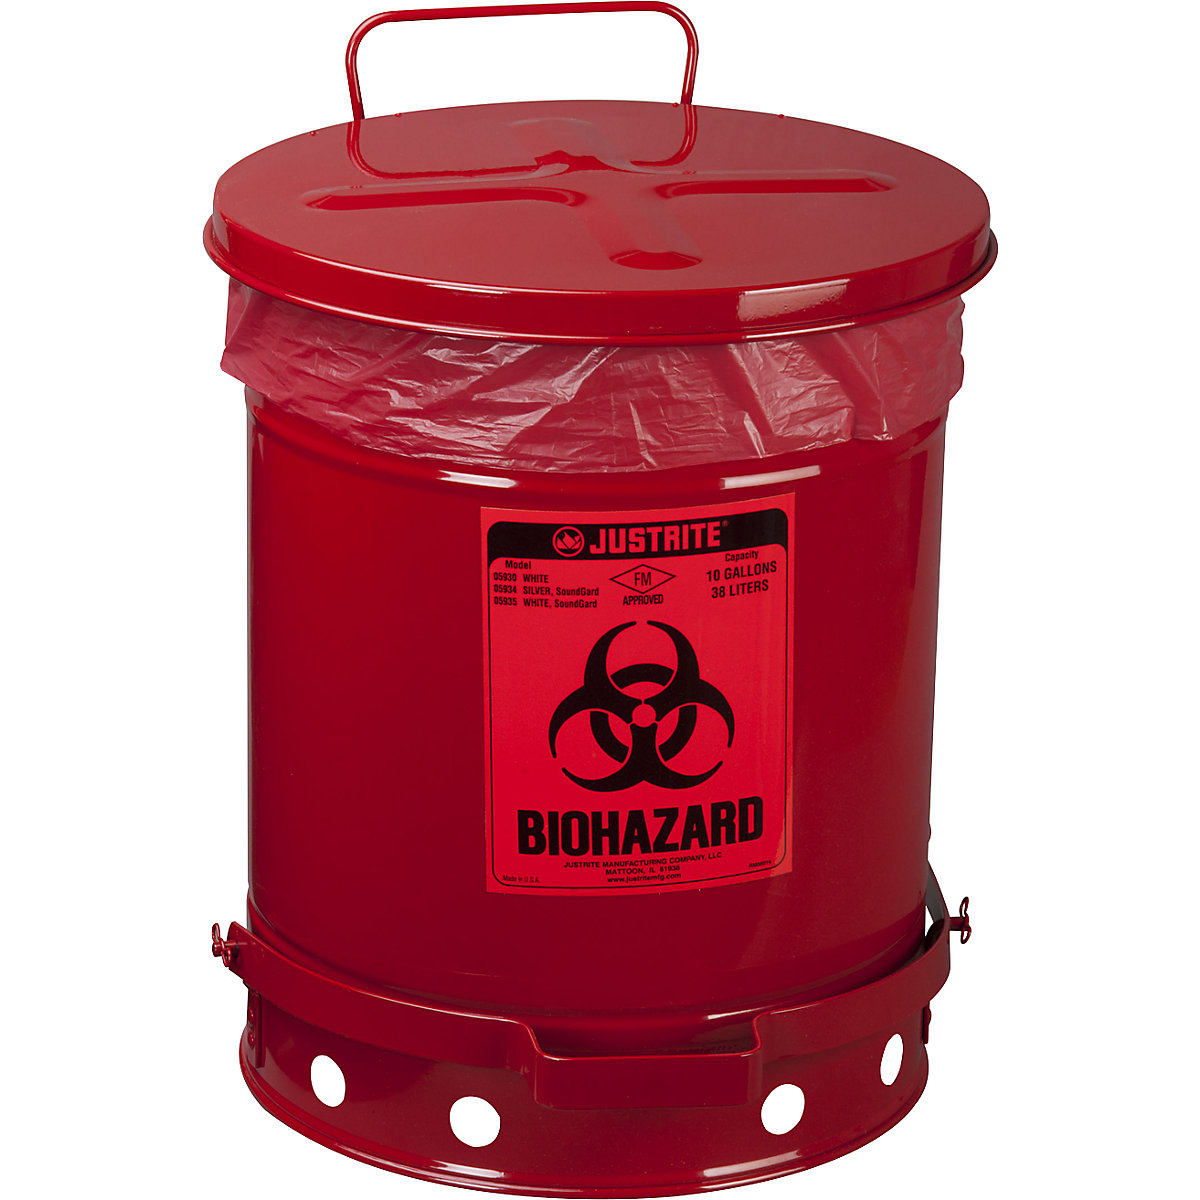 Sheet steel safety disposal can for biohazardous waste - Justrite